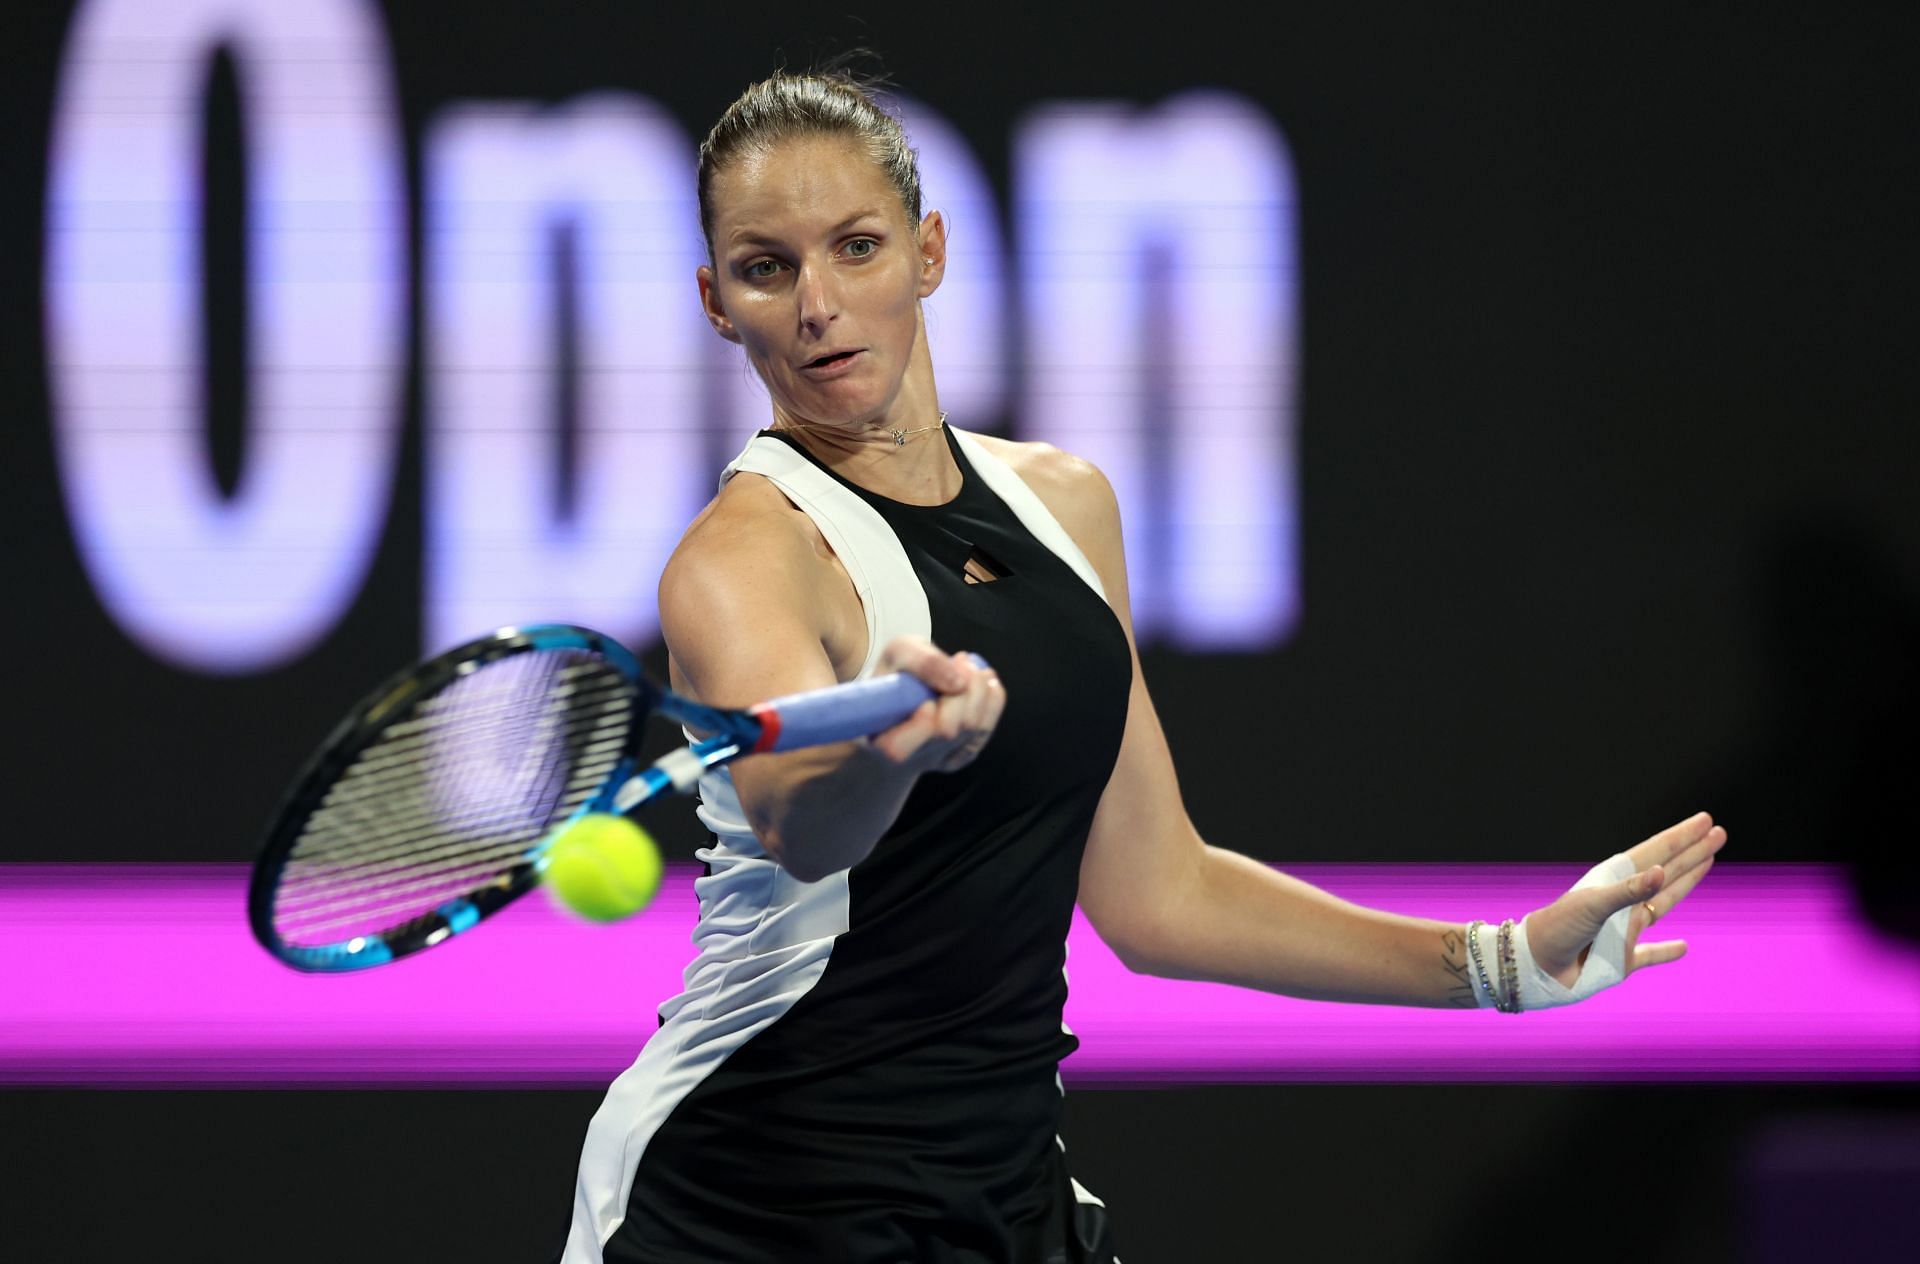 Pliskova reached the final of the Miami Open in 2019.